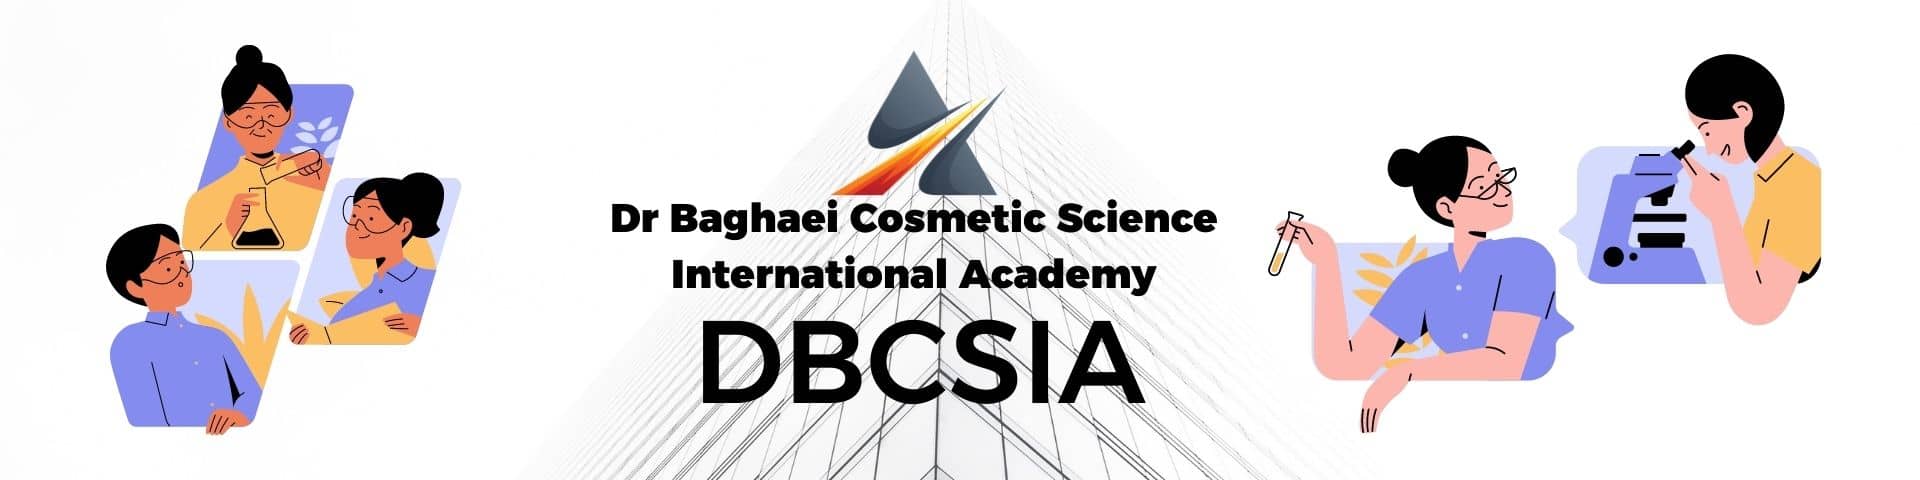 Dr Baghaei Cosmetic Science International Academy DBCSIA 1